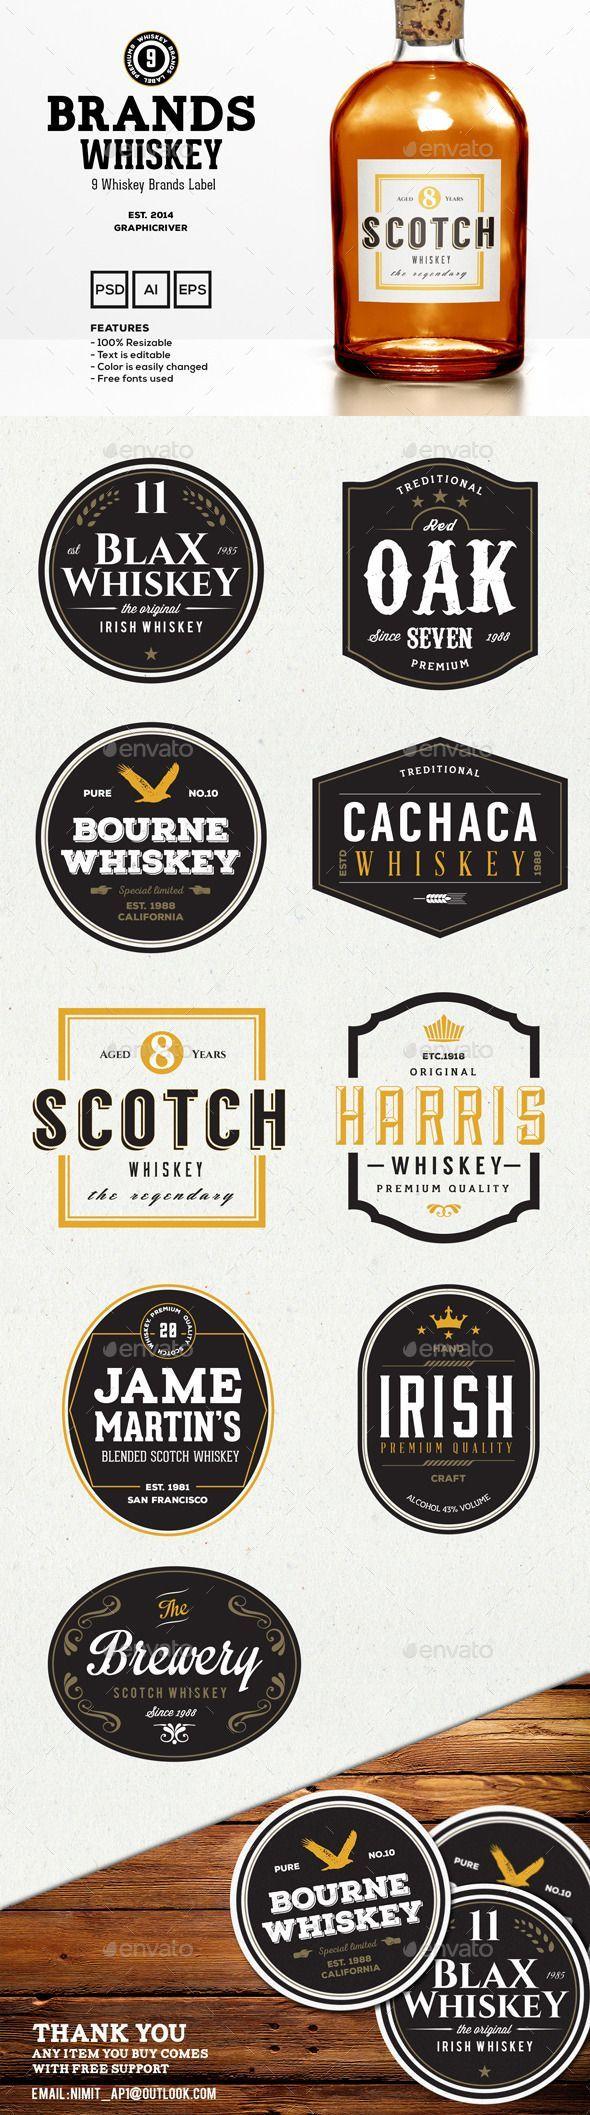 Whiskey Brand Logo - Badges Template. Whiskey